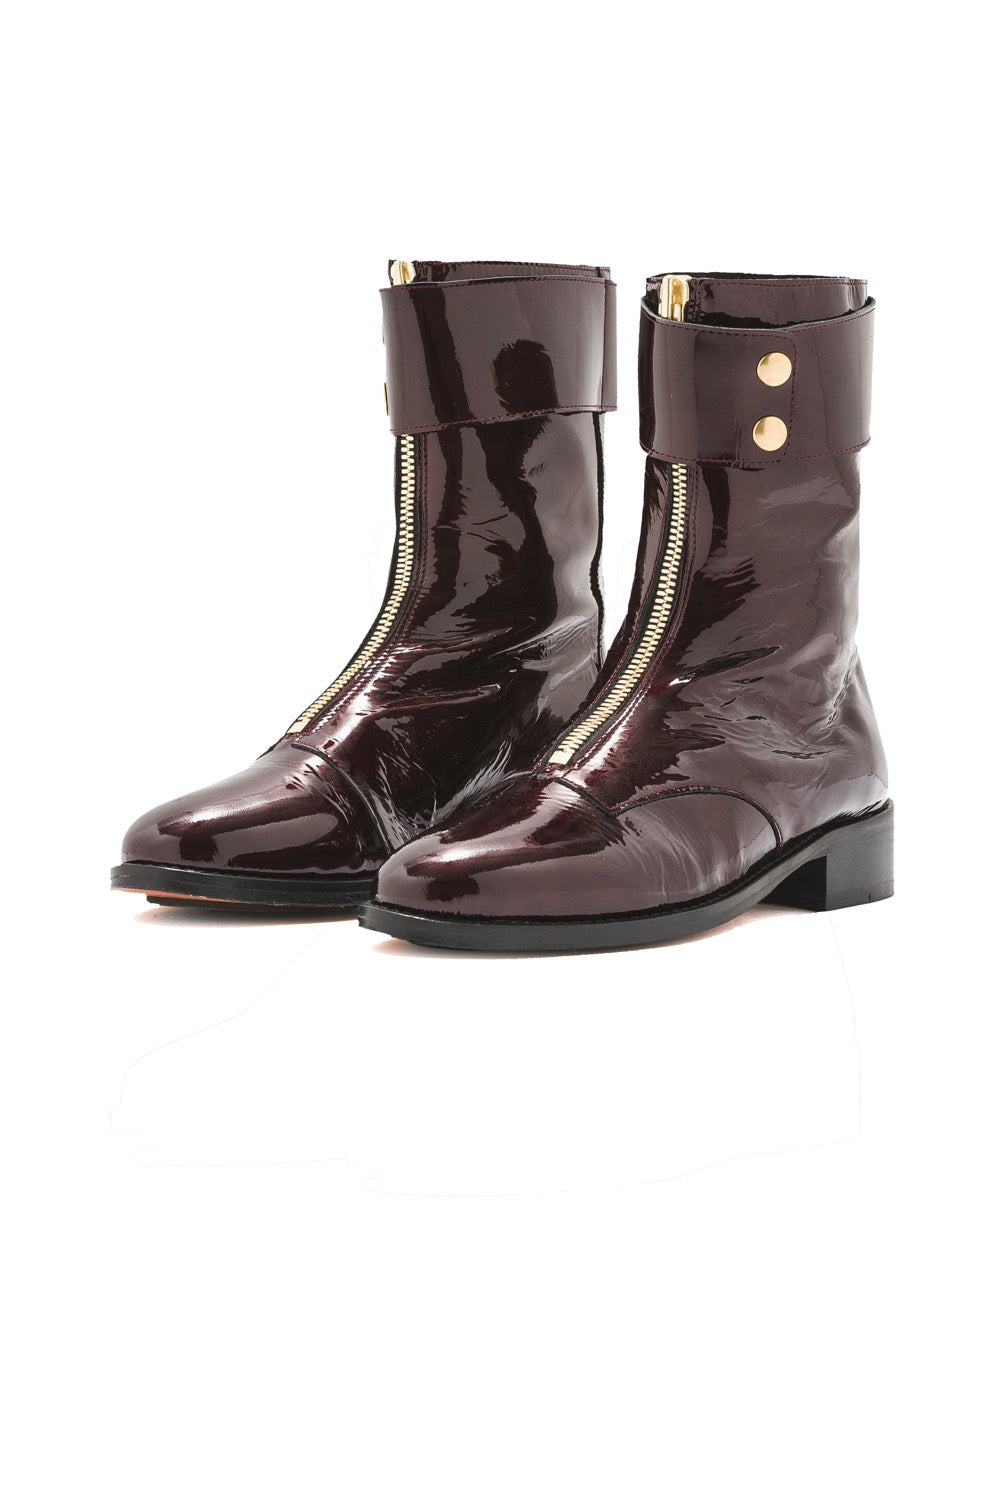 woodstock rain boots